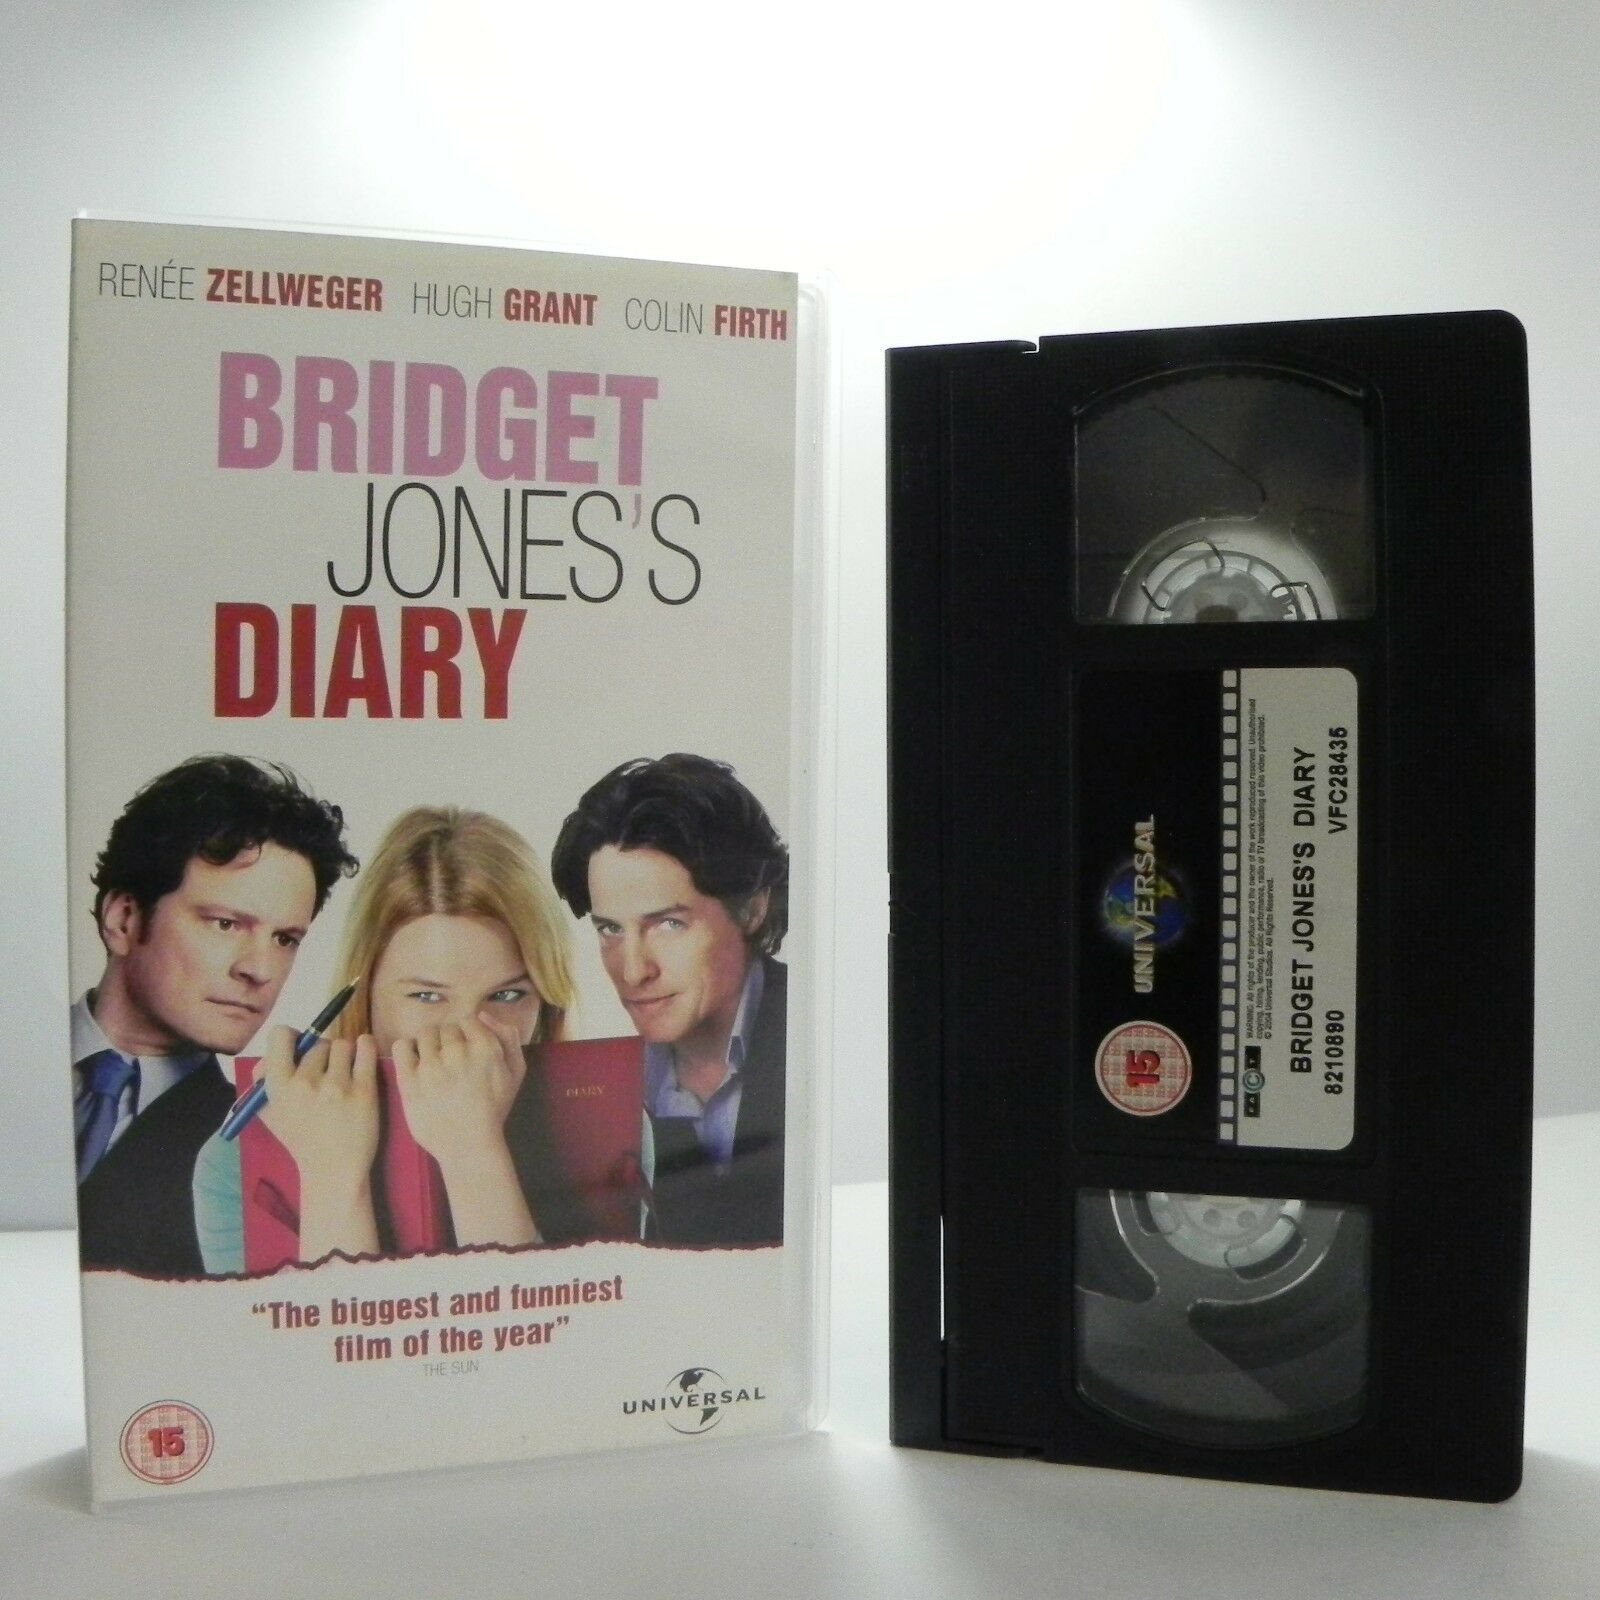 Bridget Jones's Diary: Universal (2003) - Comedy/Romance - R.Zellweger - Pal VHS-